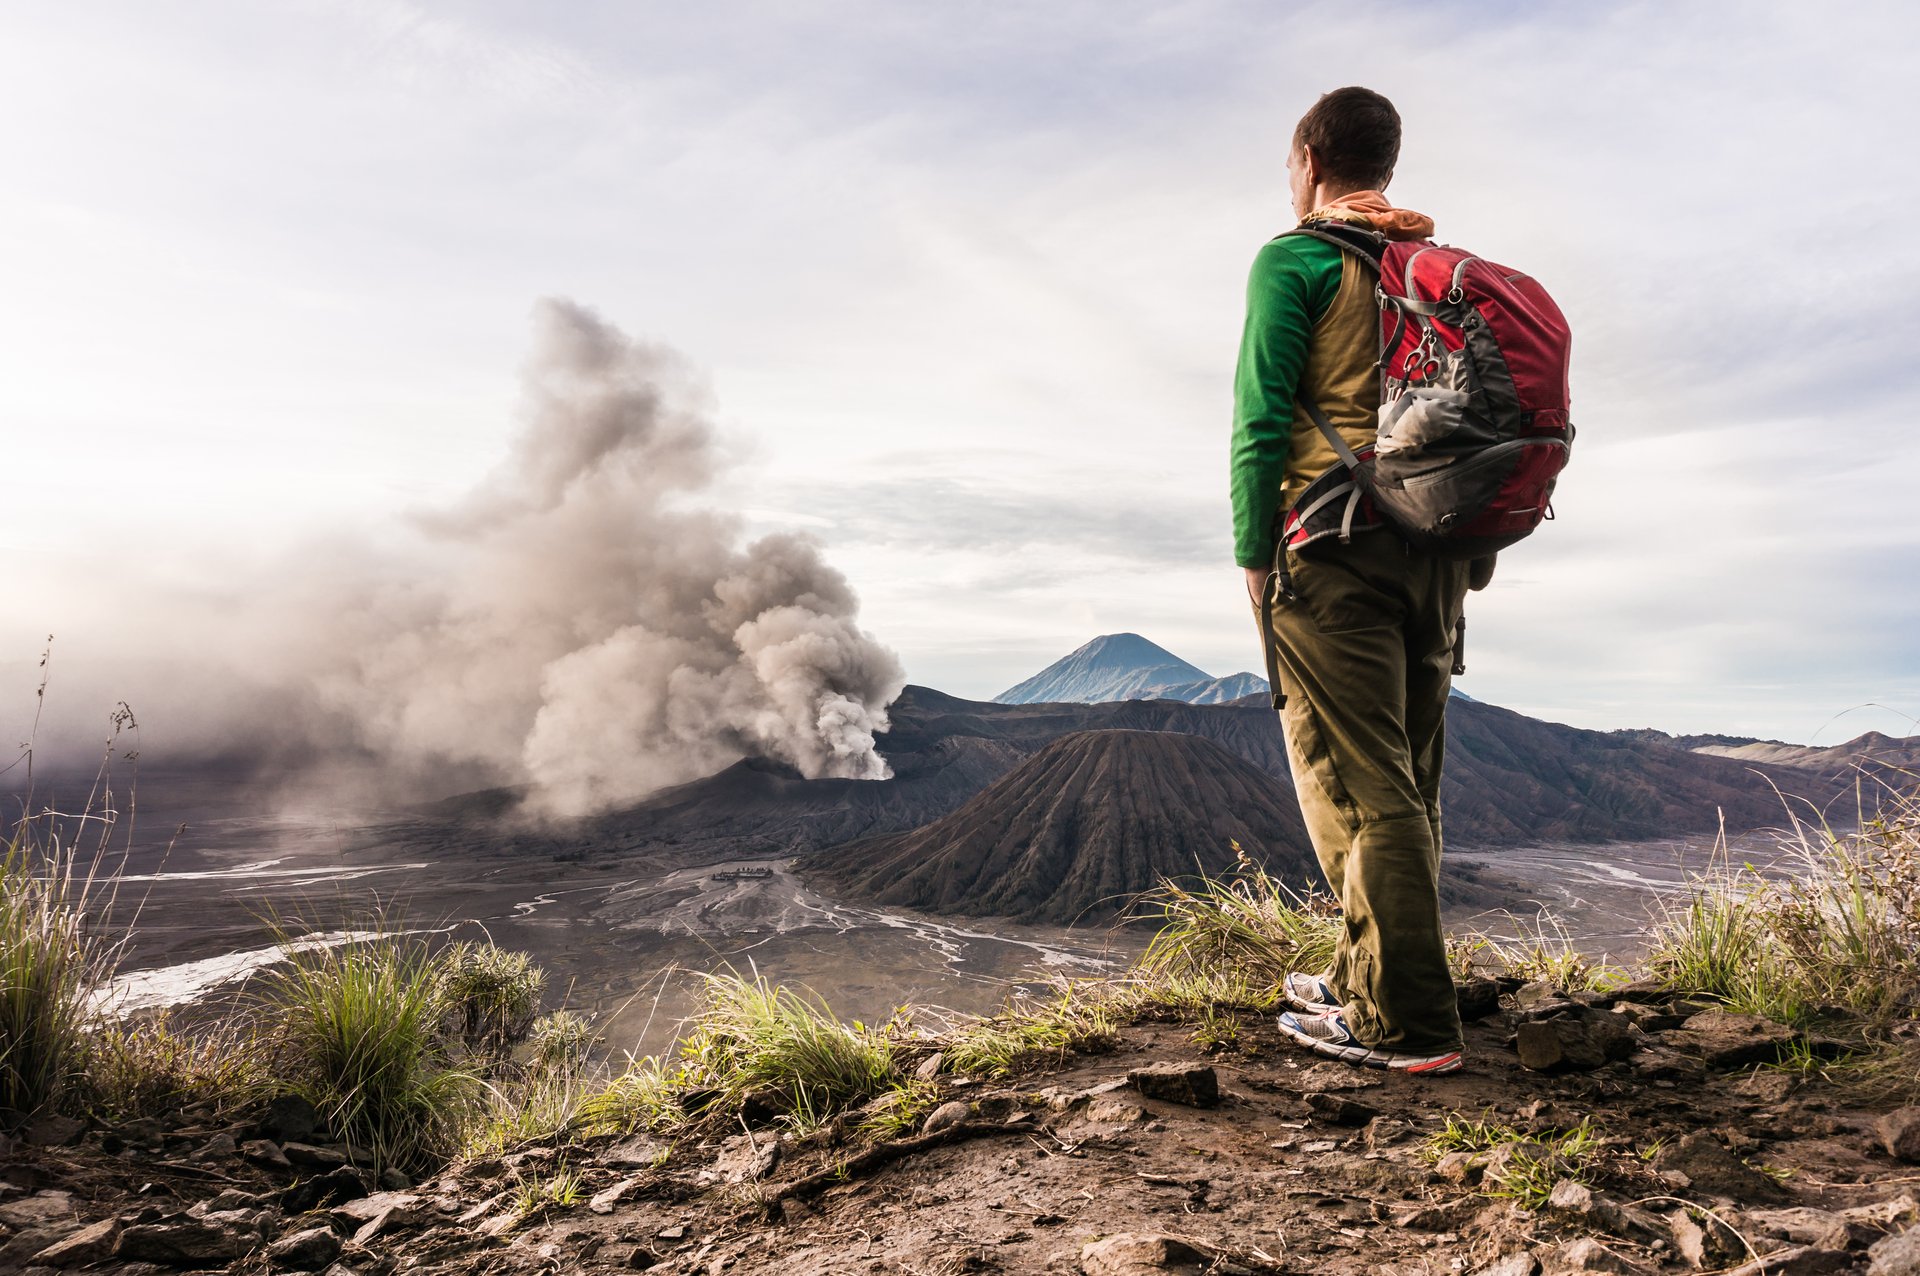 homme qui regarde le volcan bromoj java indonesie